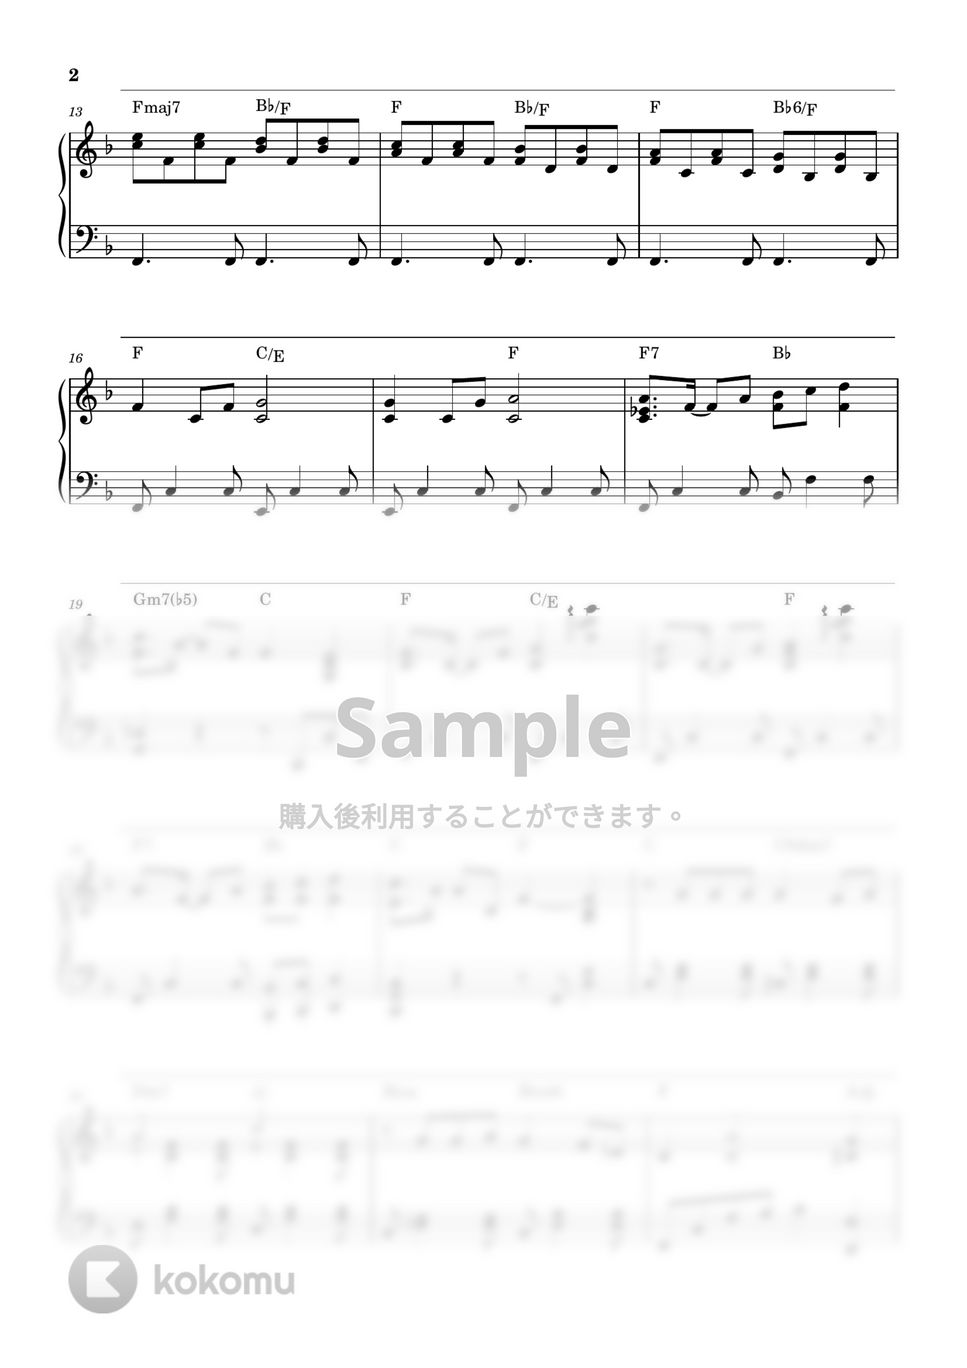 Hisaishi joe - 崖の上のポニョ OST by hellopiano